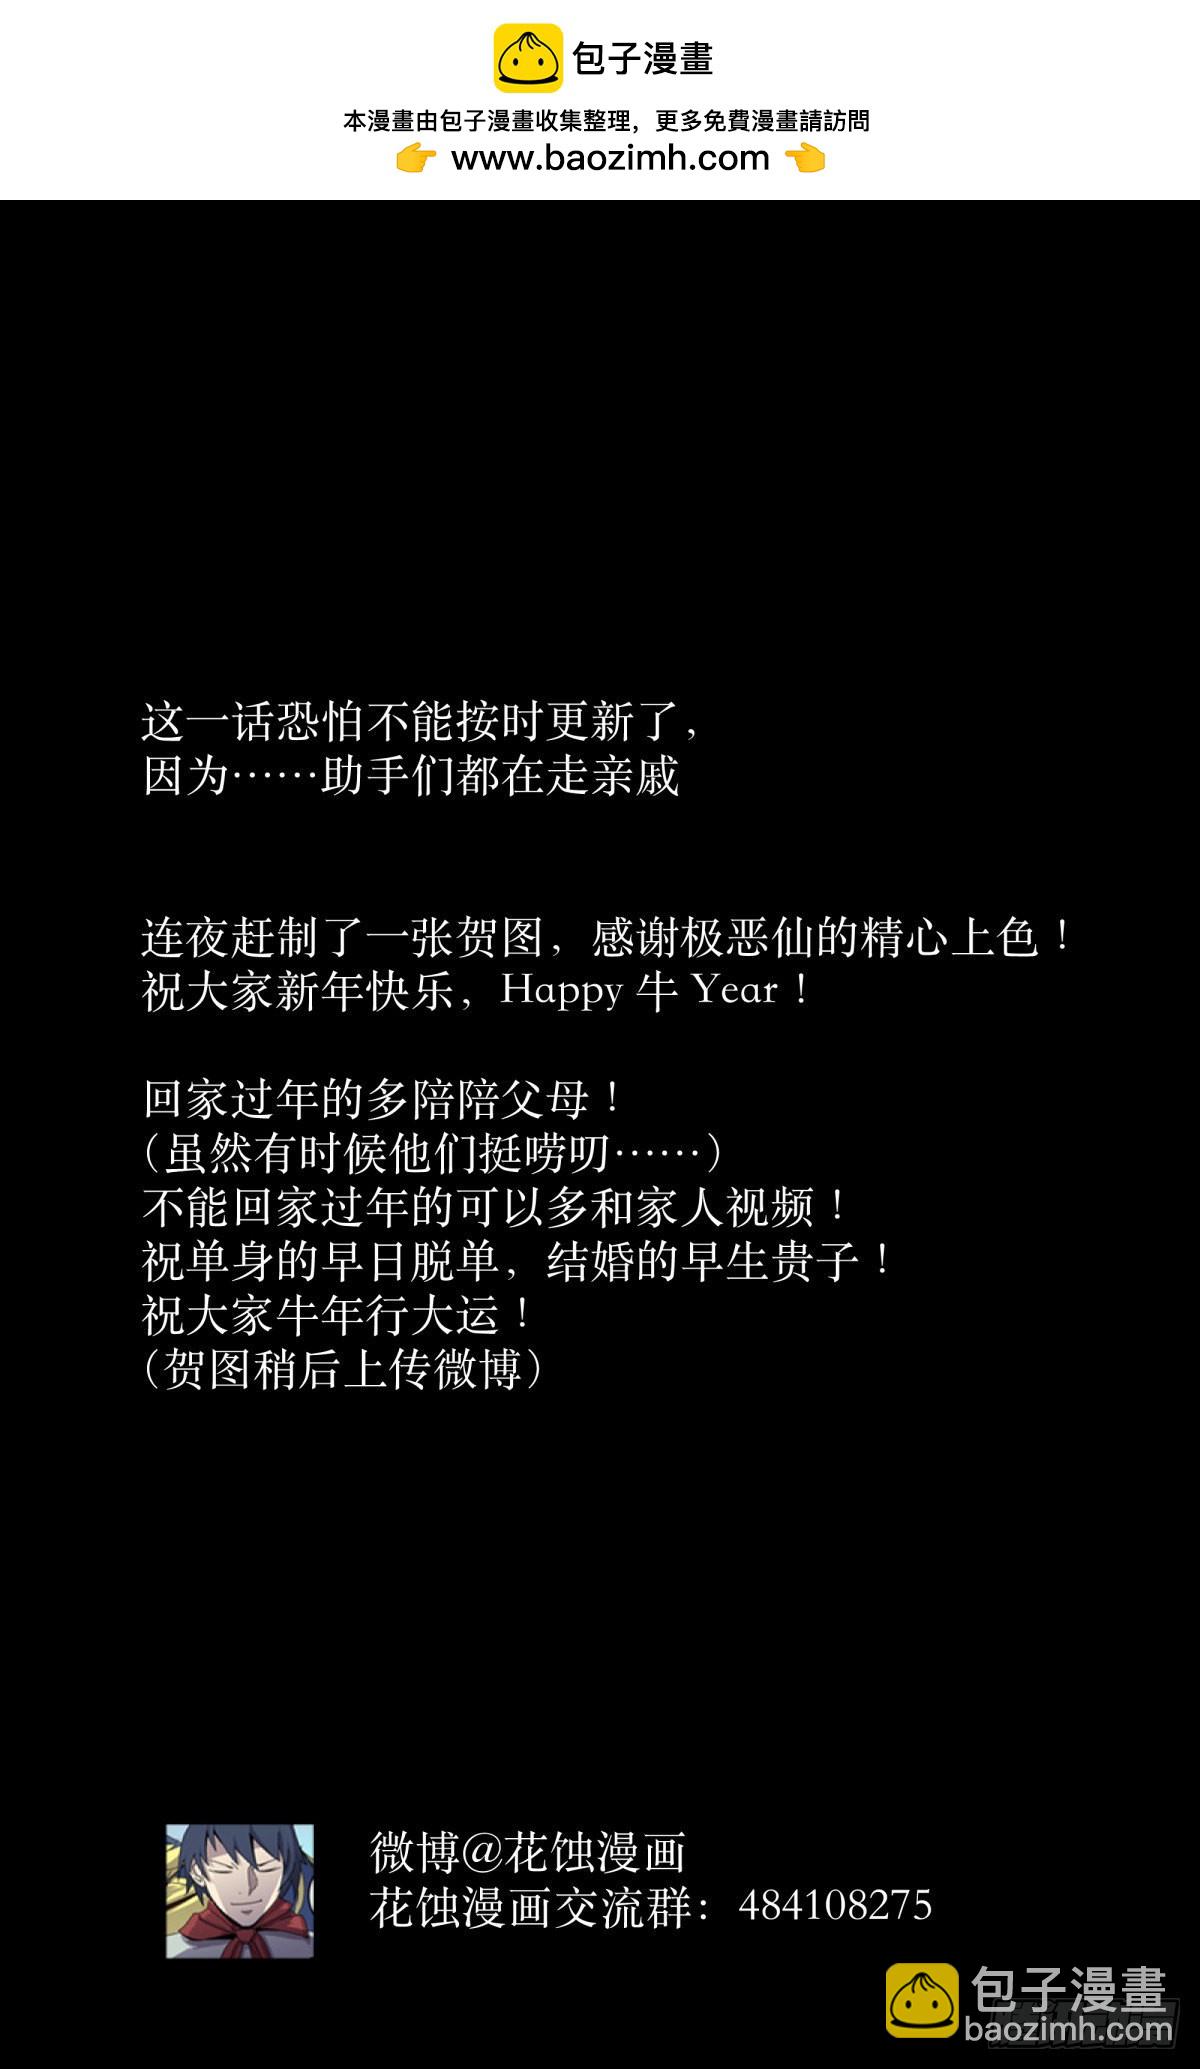 三更四鼓 - happy 牛 year！ - 1